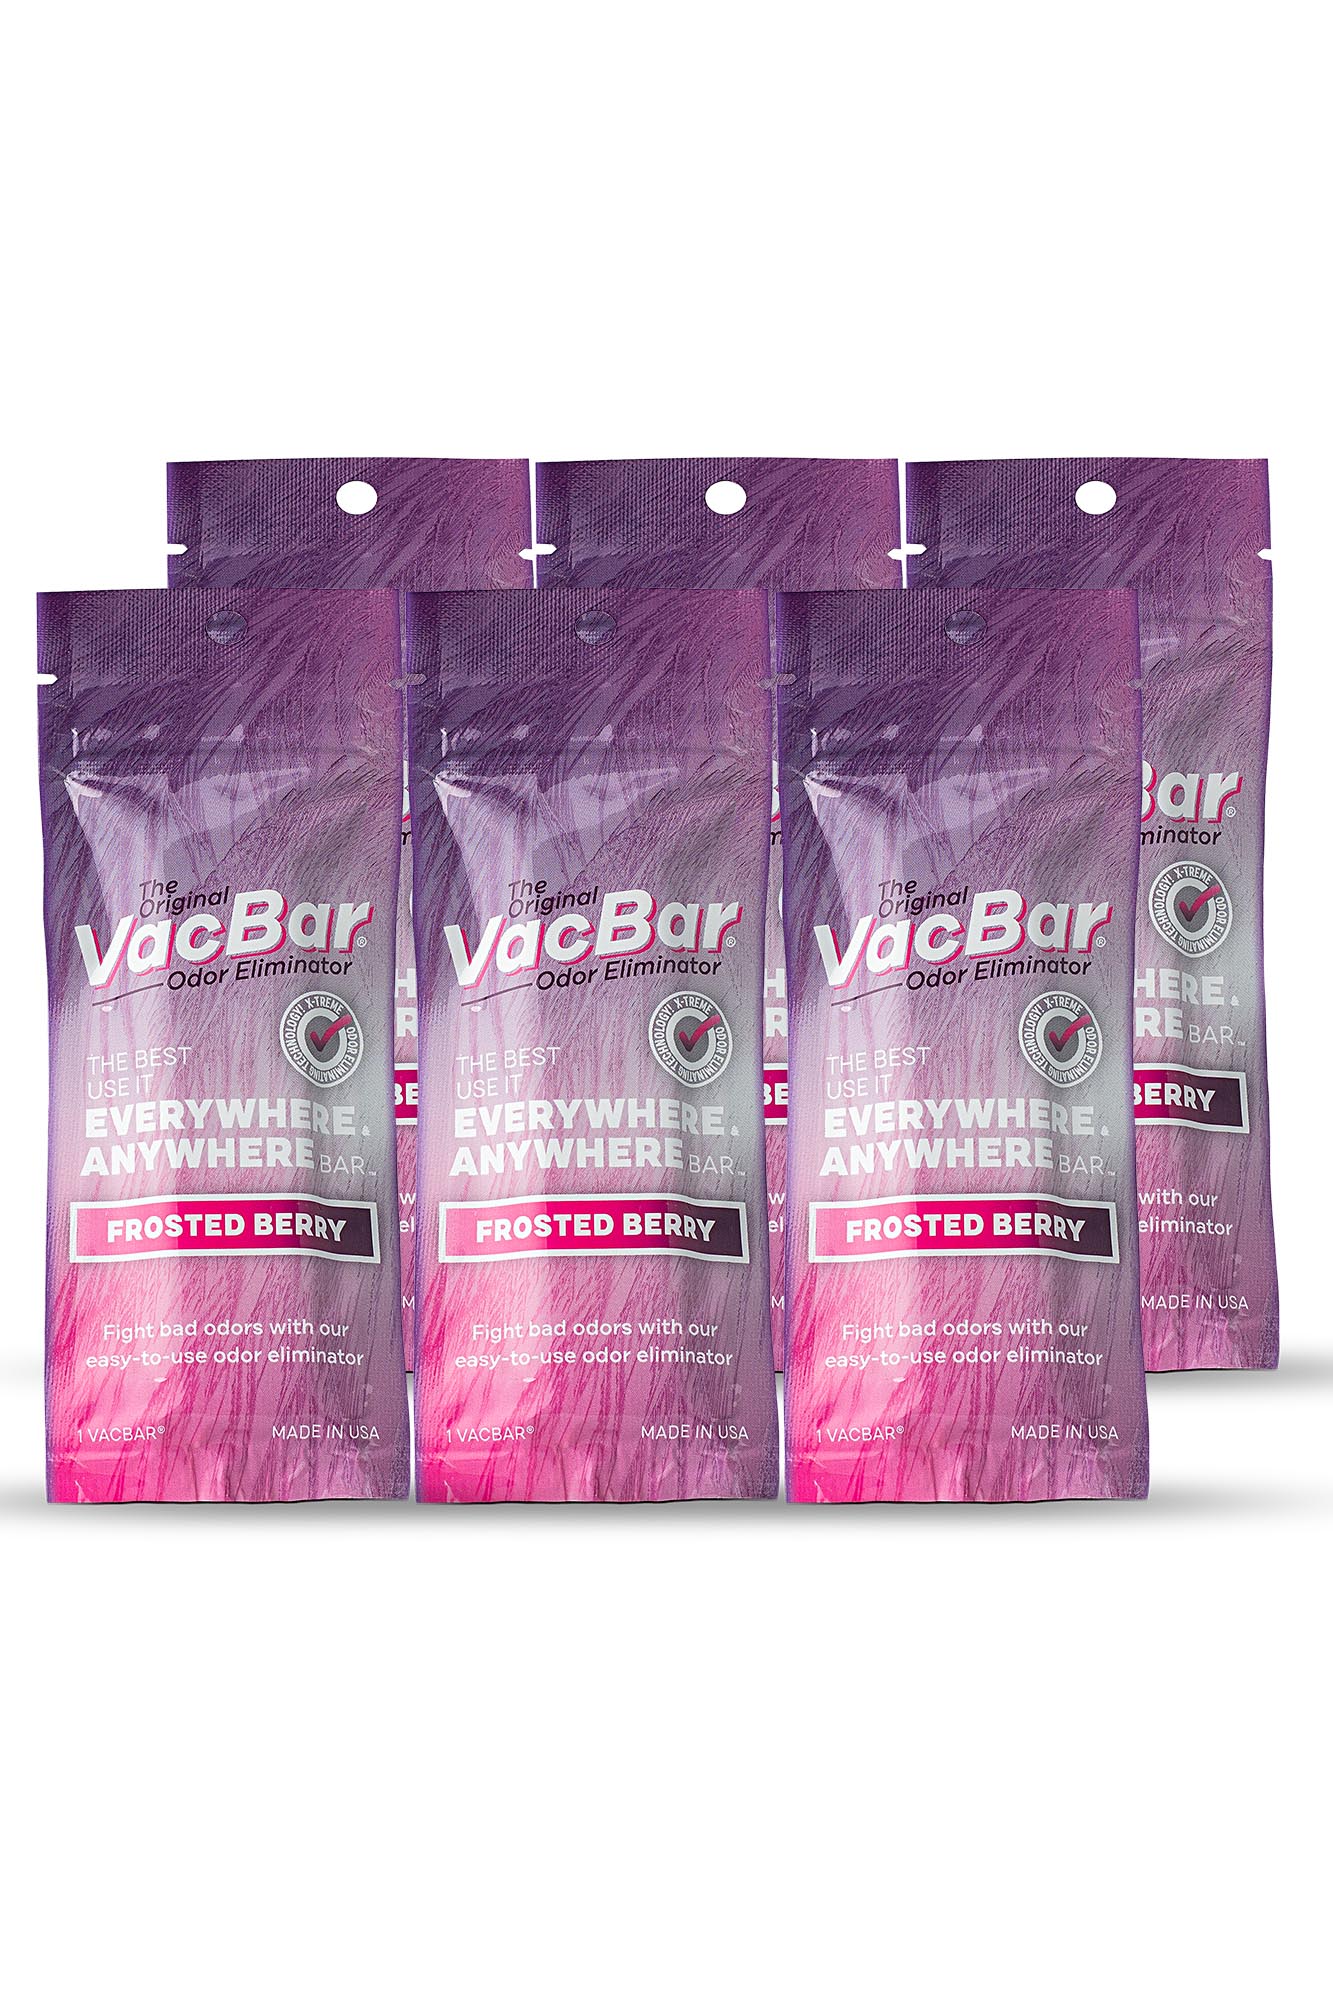 VacBar® Odor Eliminator - Frosted Berry, 6 Bars